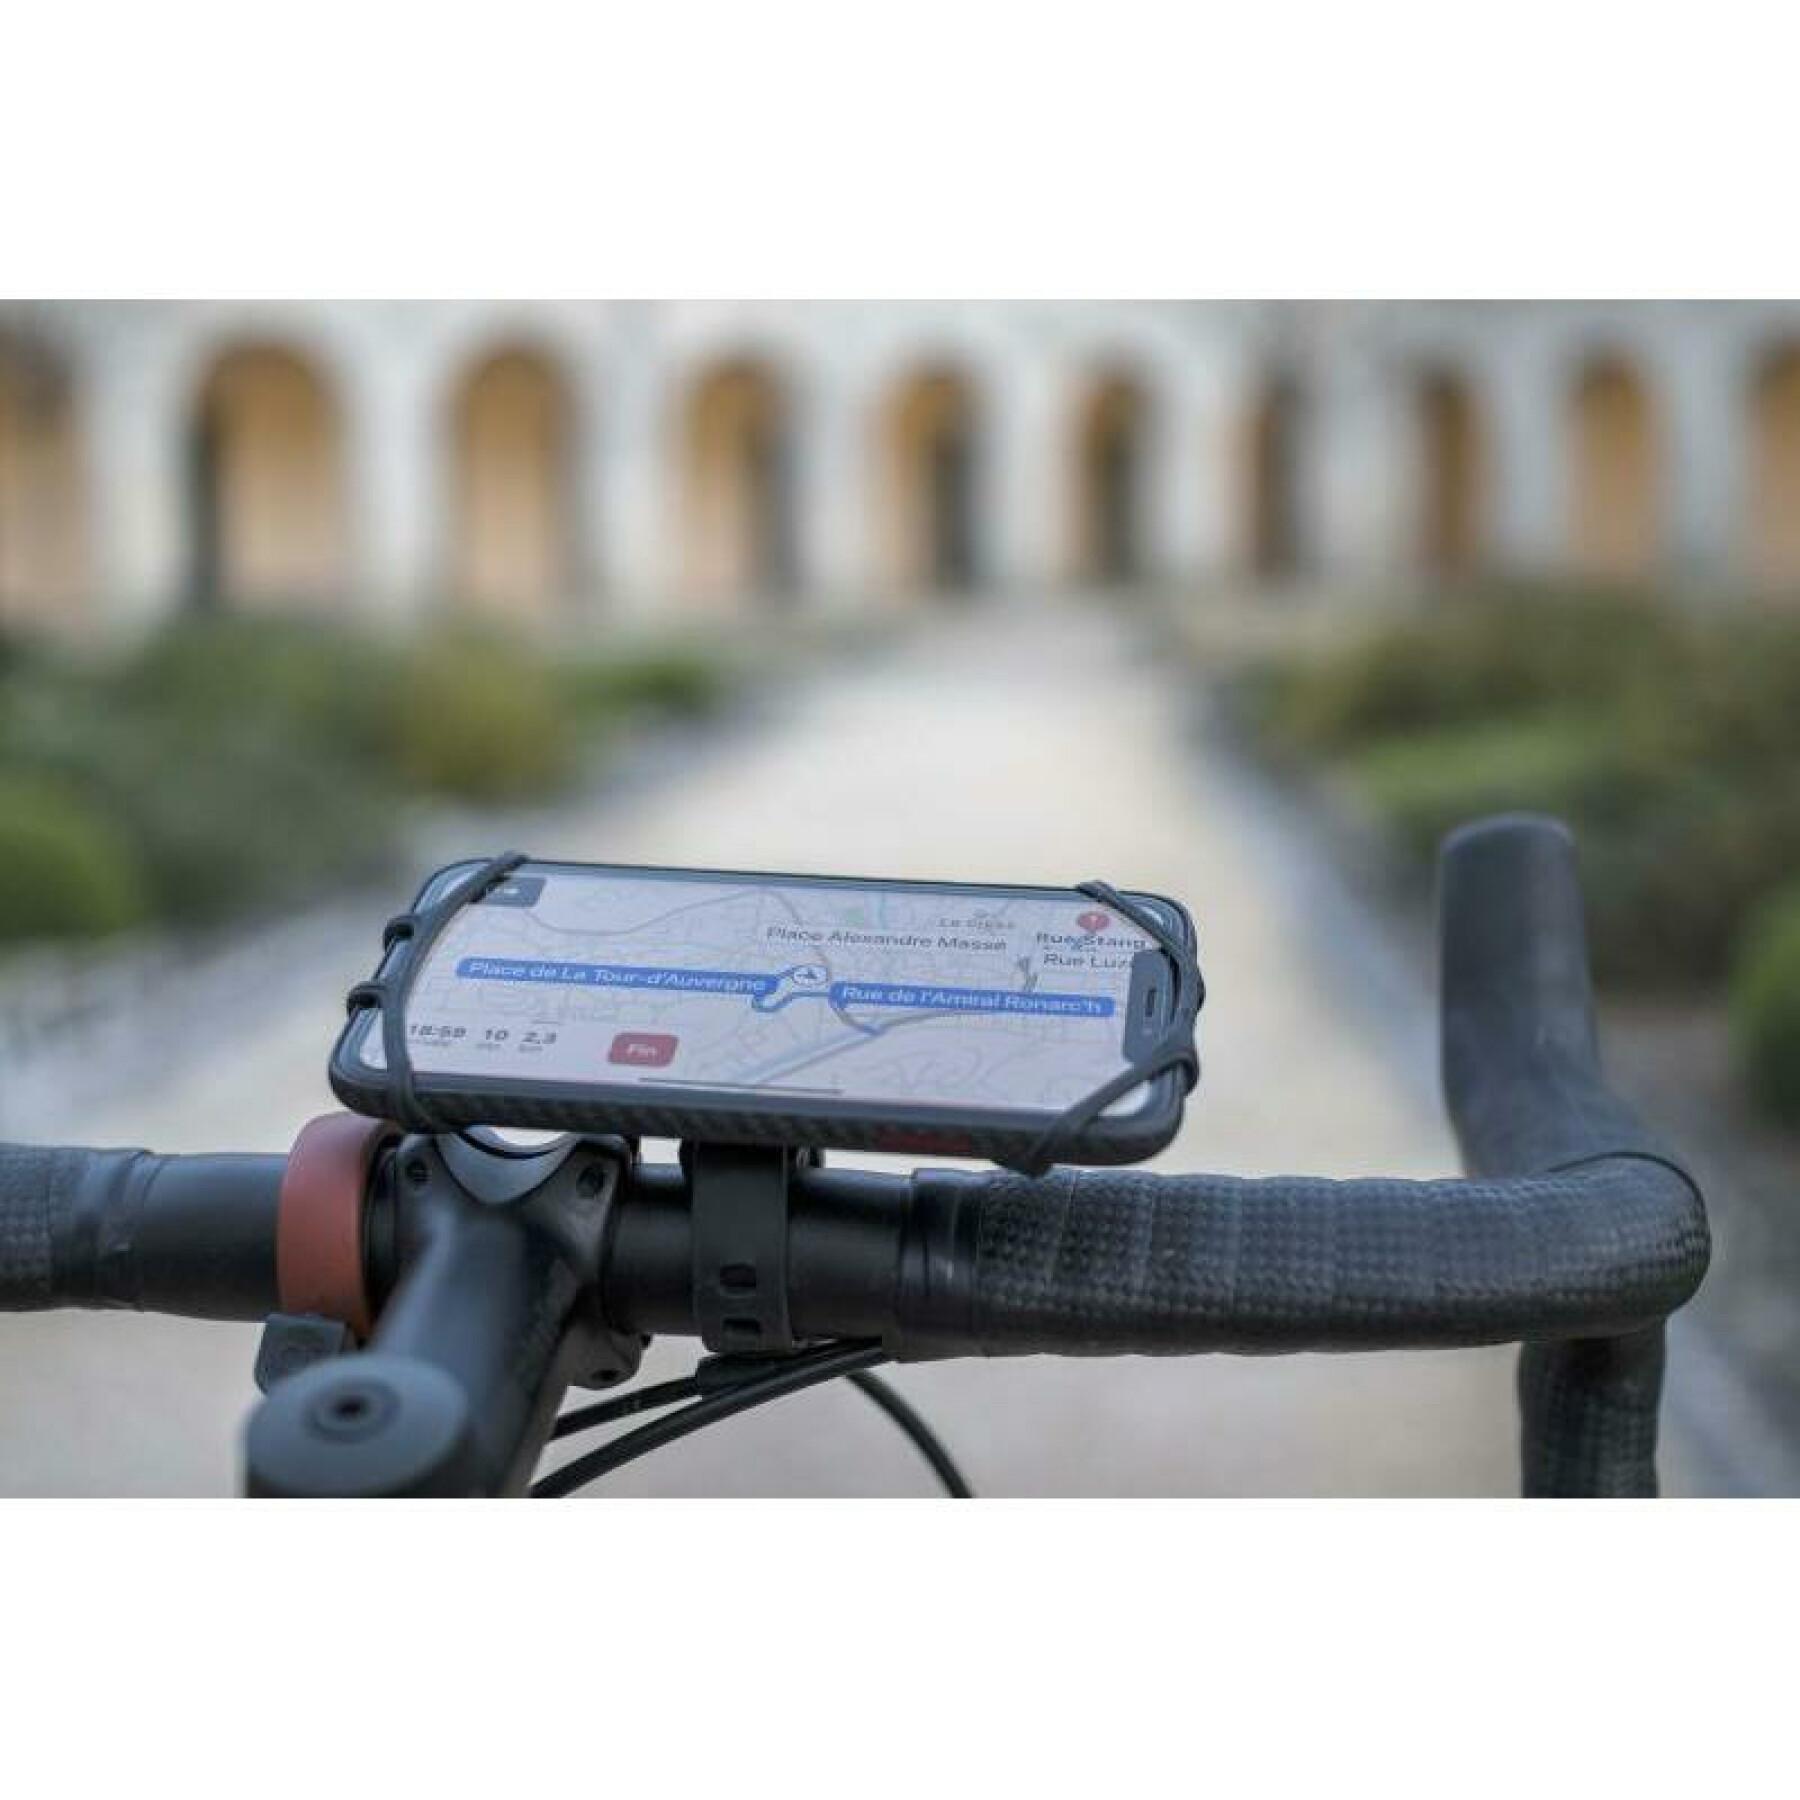 Porta smartphone universale per manubri di scooter e bici Toad handy holder